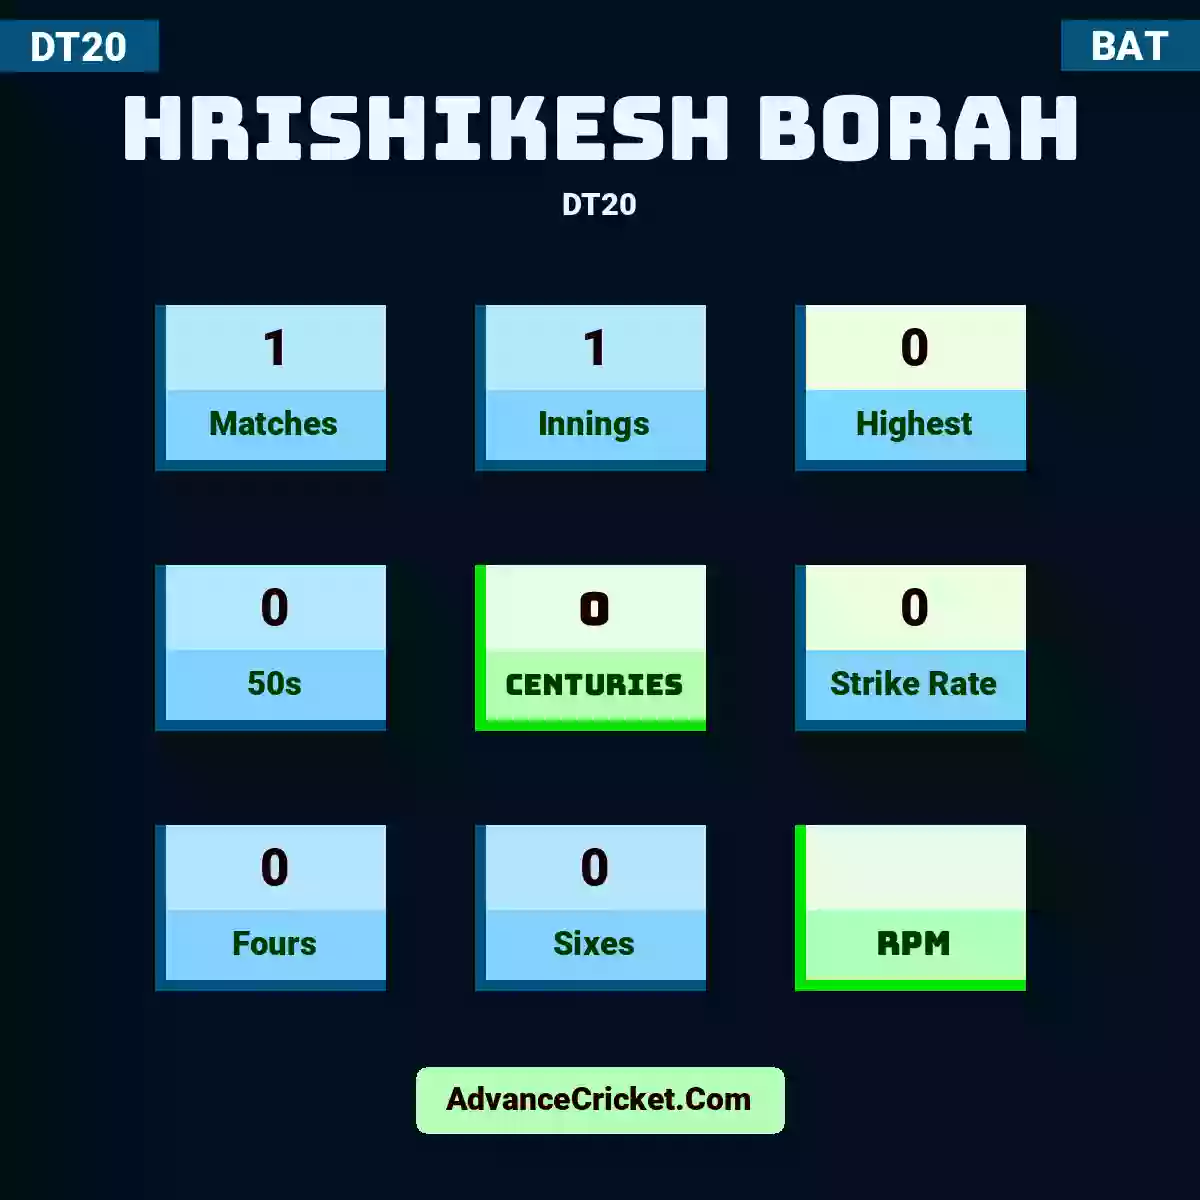 Hrishikesh Borah DT20 , Hrishikesh Borah played 1 matches, scored 0 runs as highest, 0 half-centuries, and 0 centuries, with a strike rate of 0. H.Borah hit 0 fours and 0 sixes.